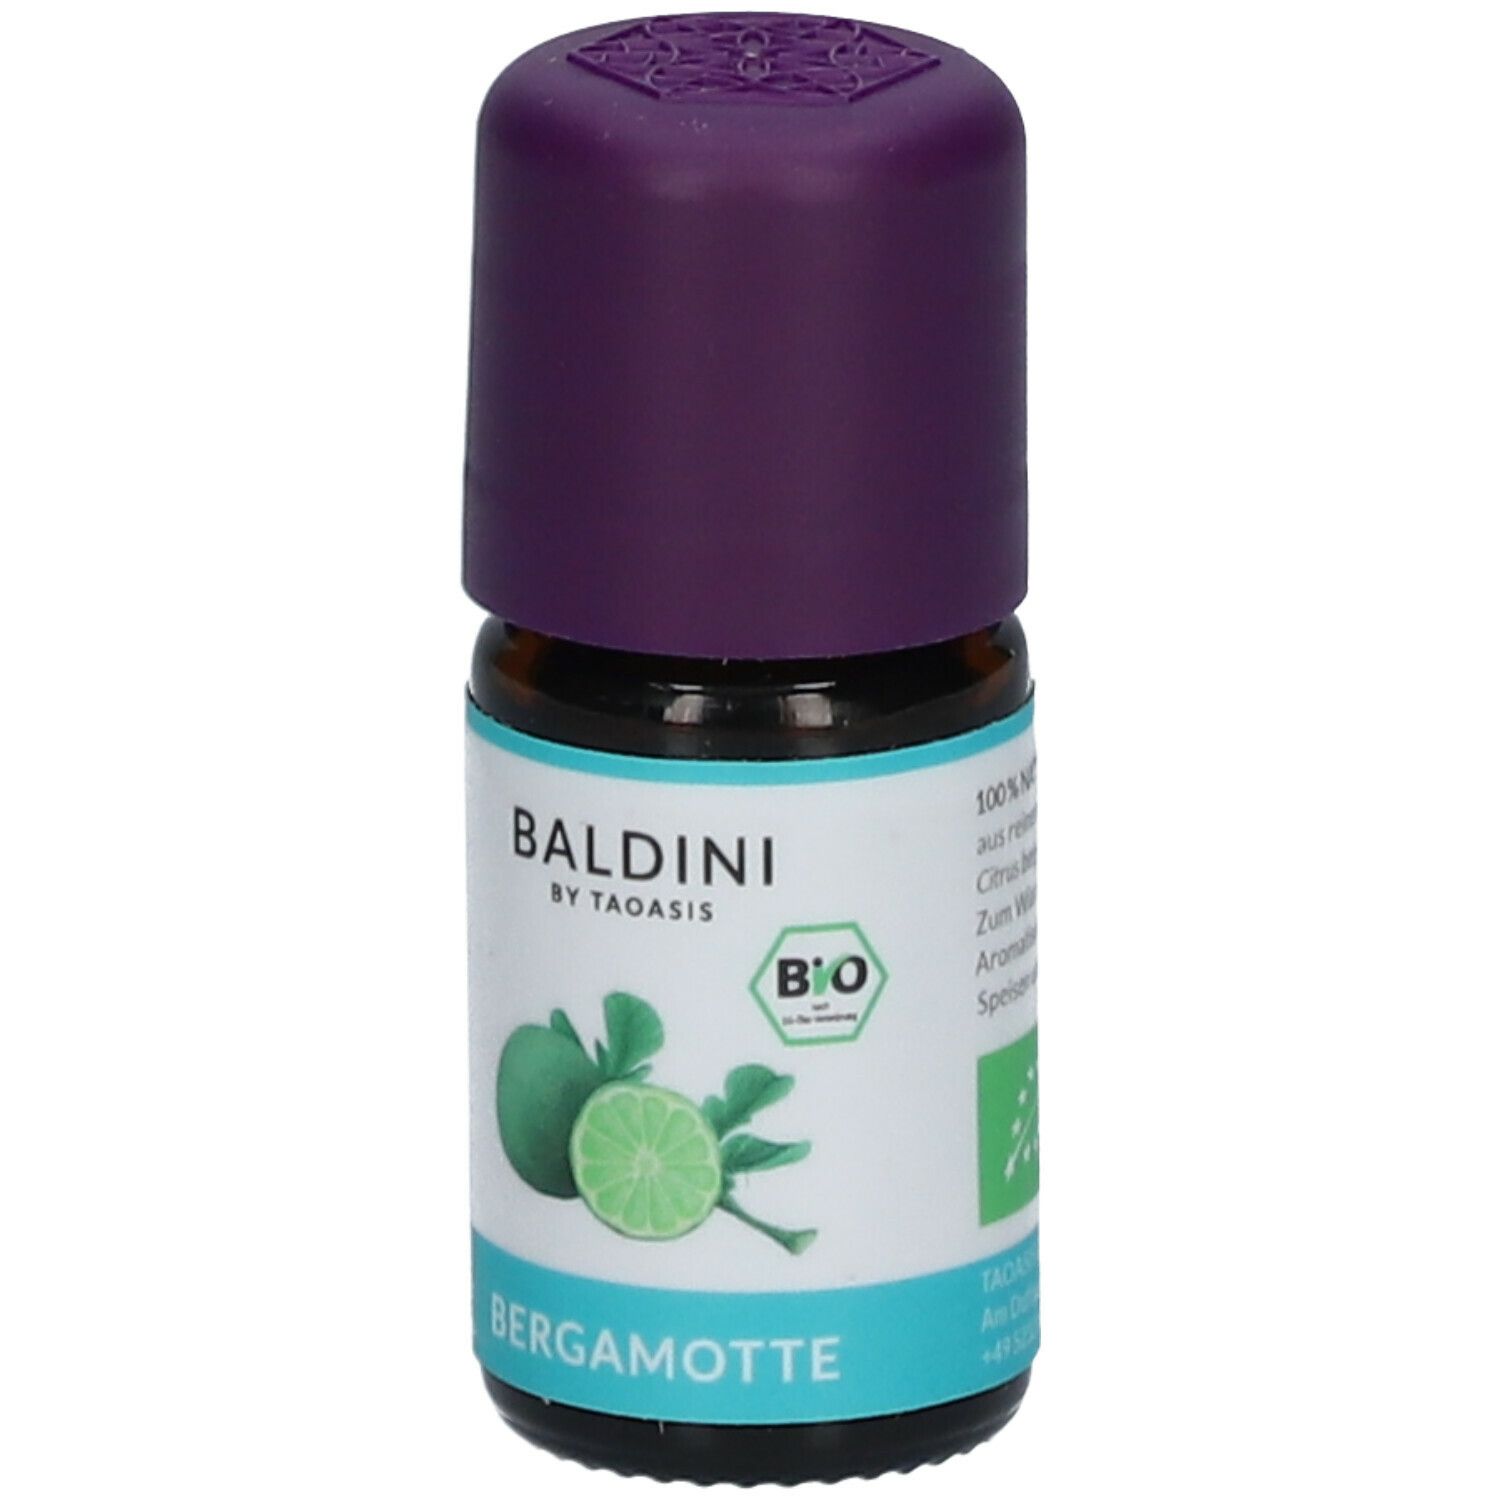 BALDINI BY TAOASIS BIO Bergamotte Aromaöl 5 ml - SHOP APOTHEKE